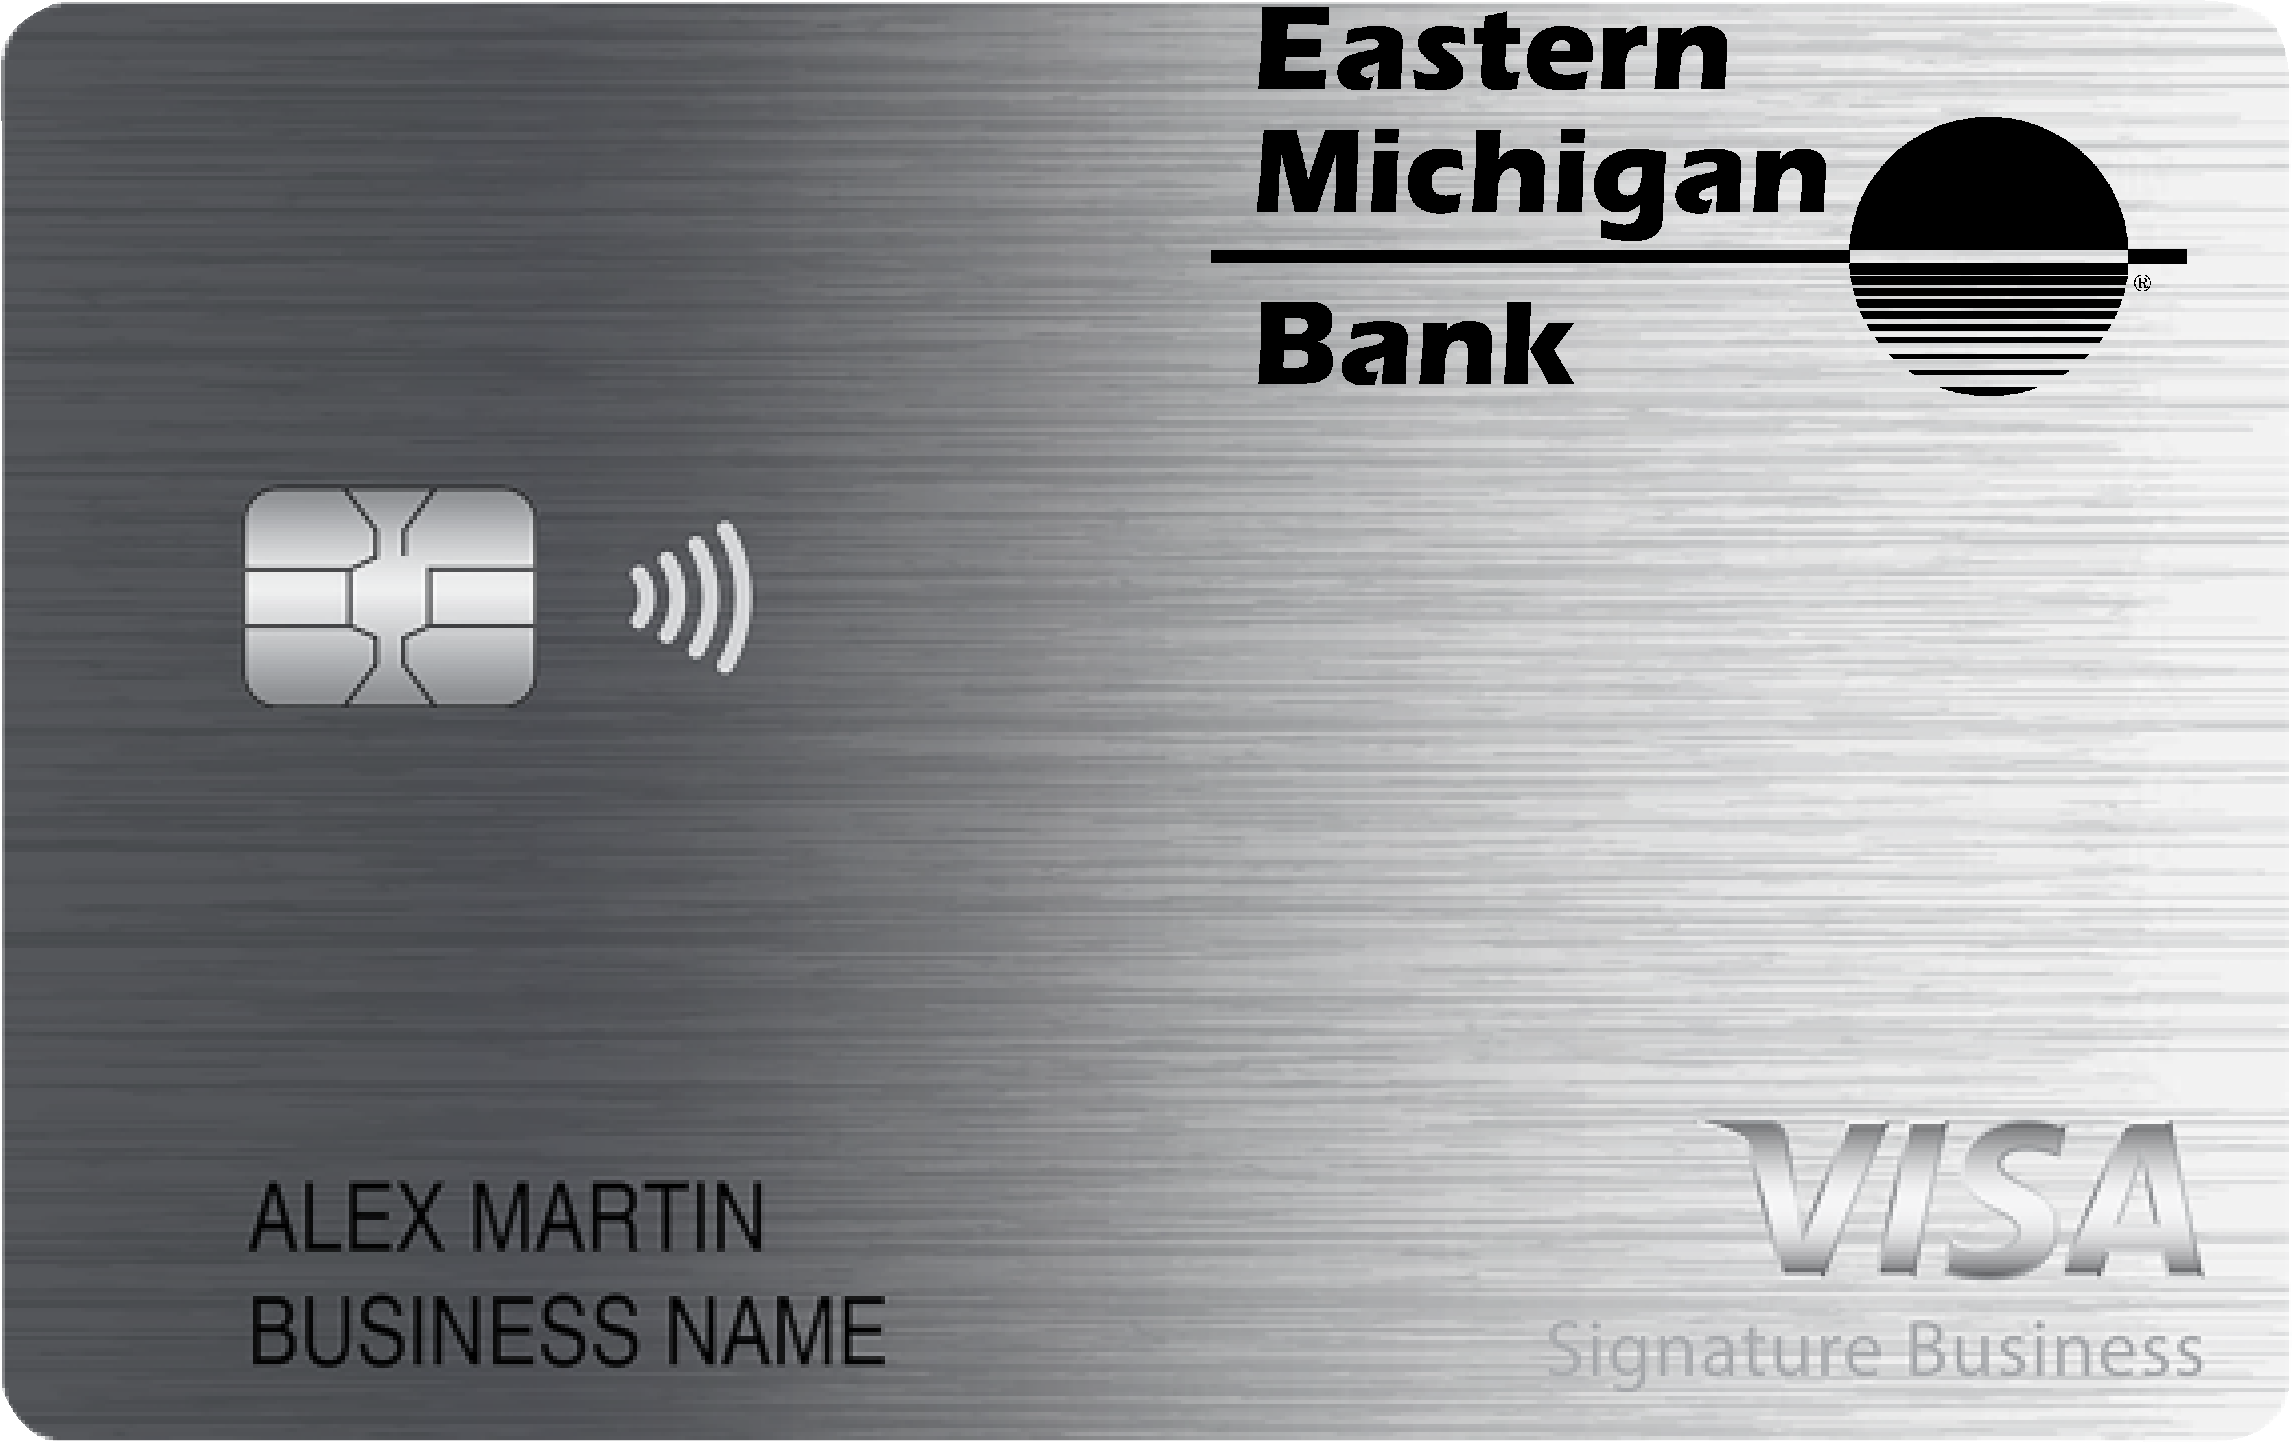 Eastern Michigan Bank Smart Business Rewards Card